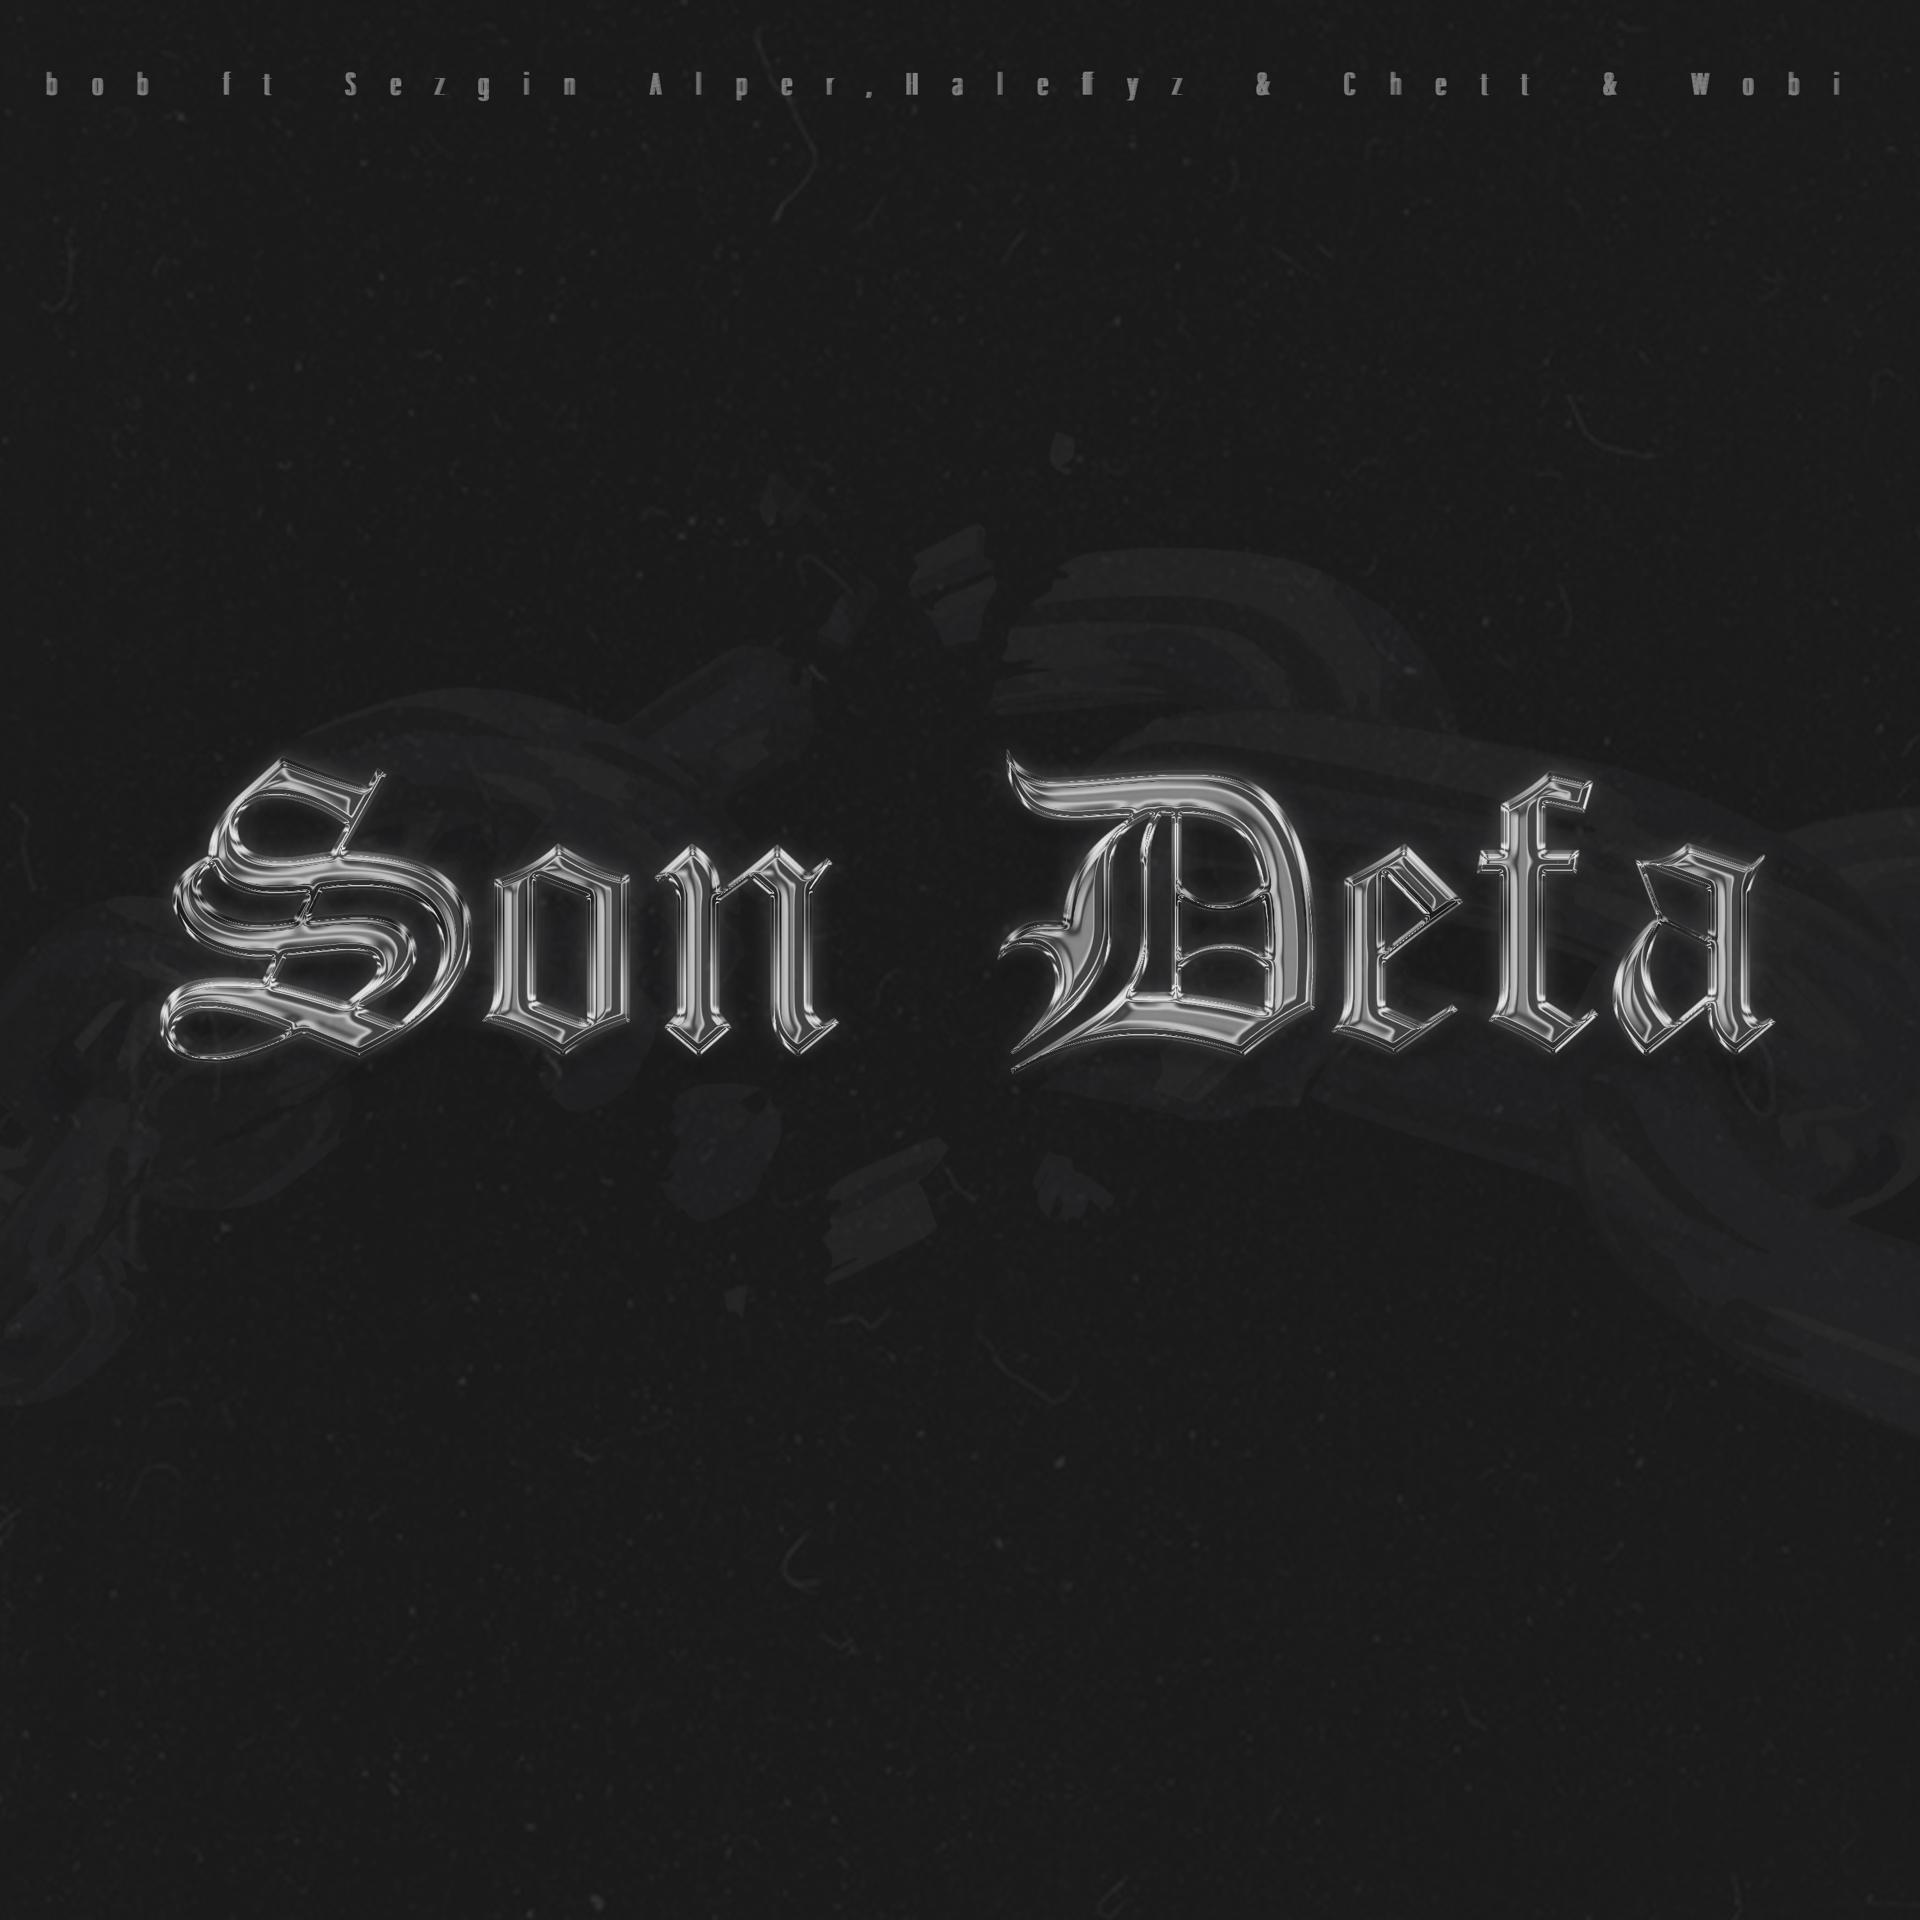 Постер альбома Son Defa